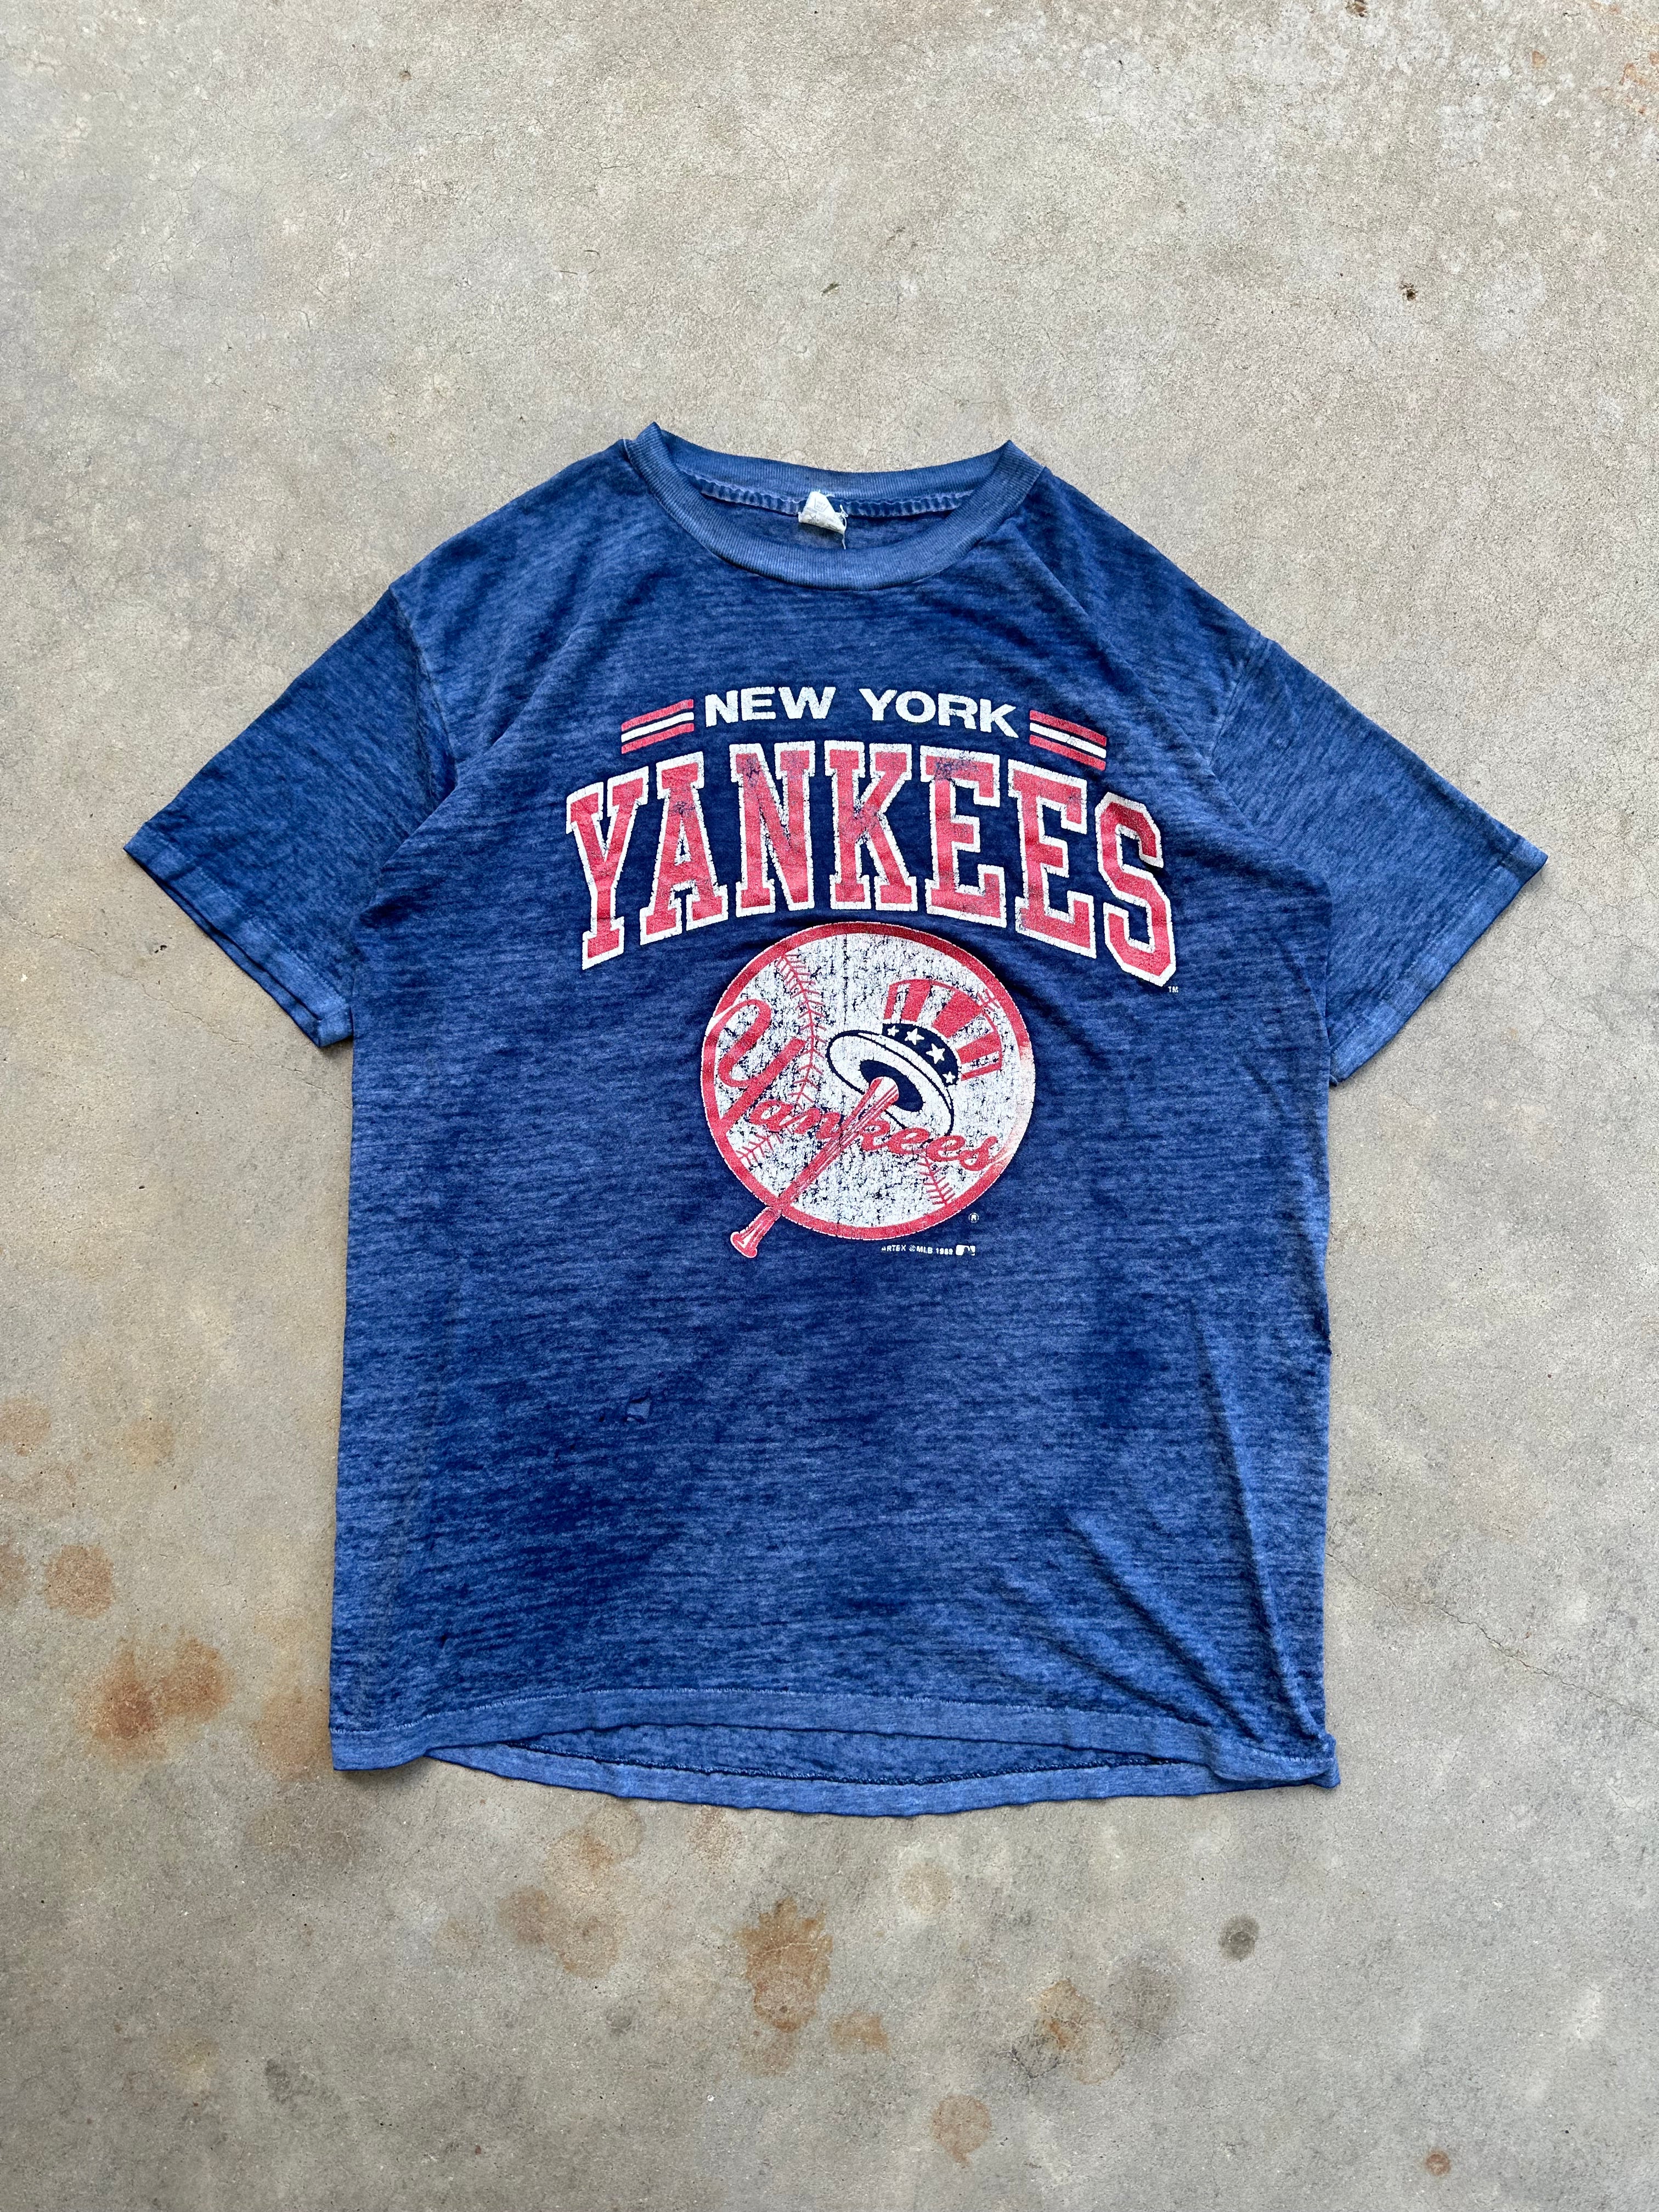 1989 Faded/Worn New York Yankees T-Shirt (M)